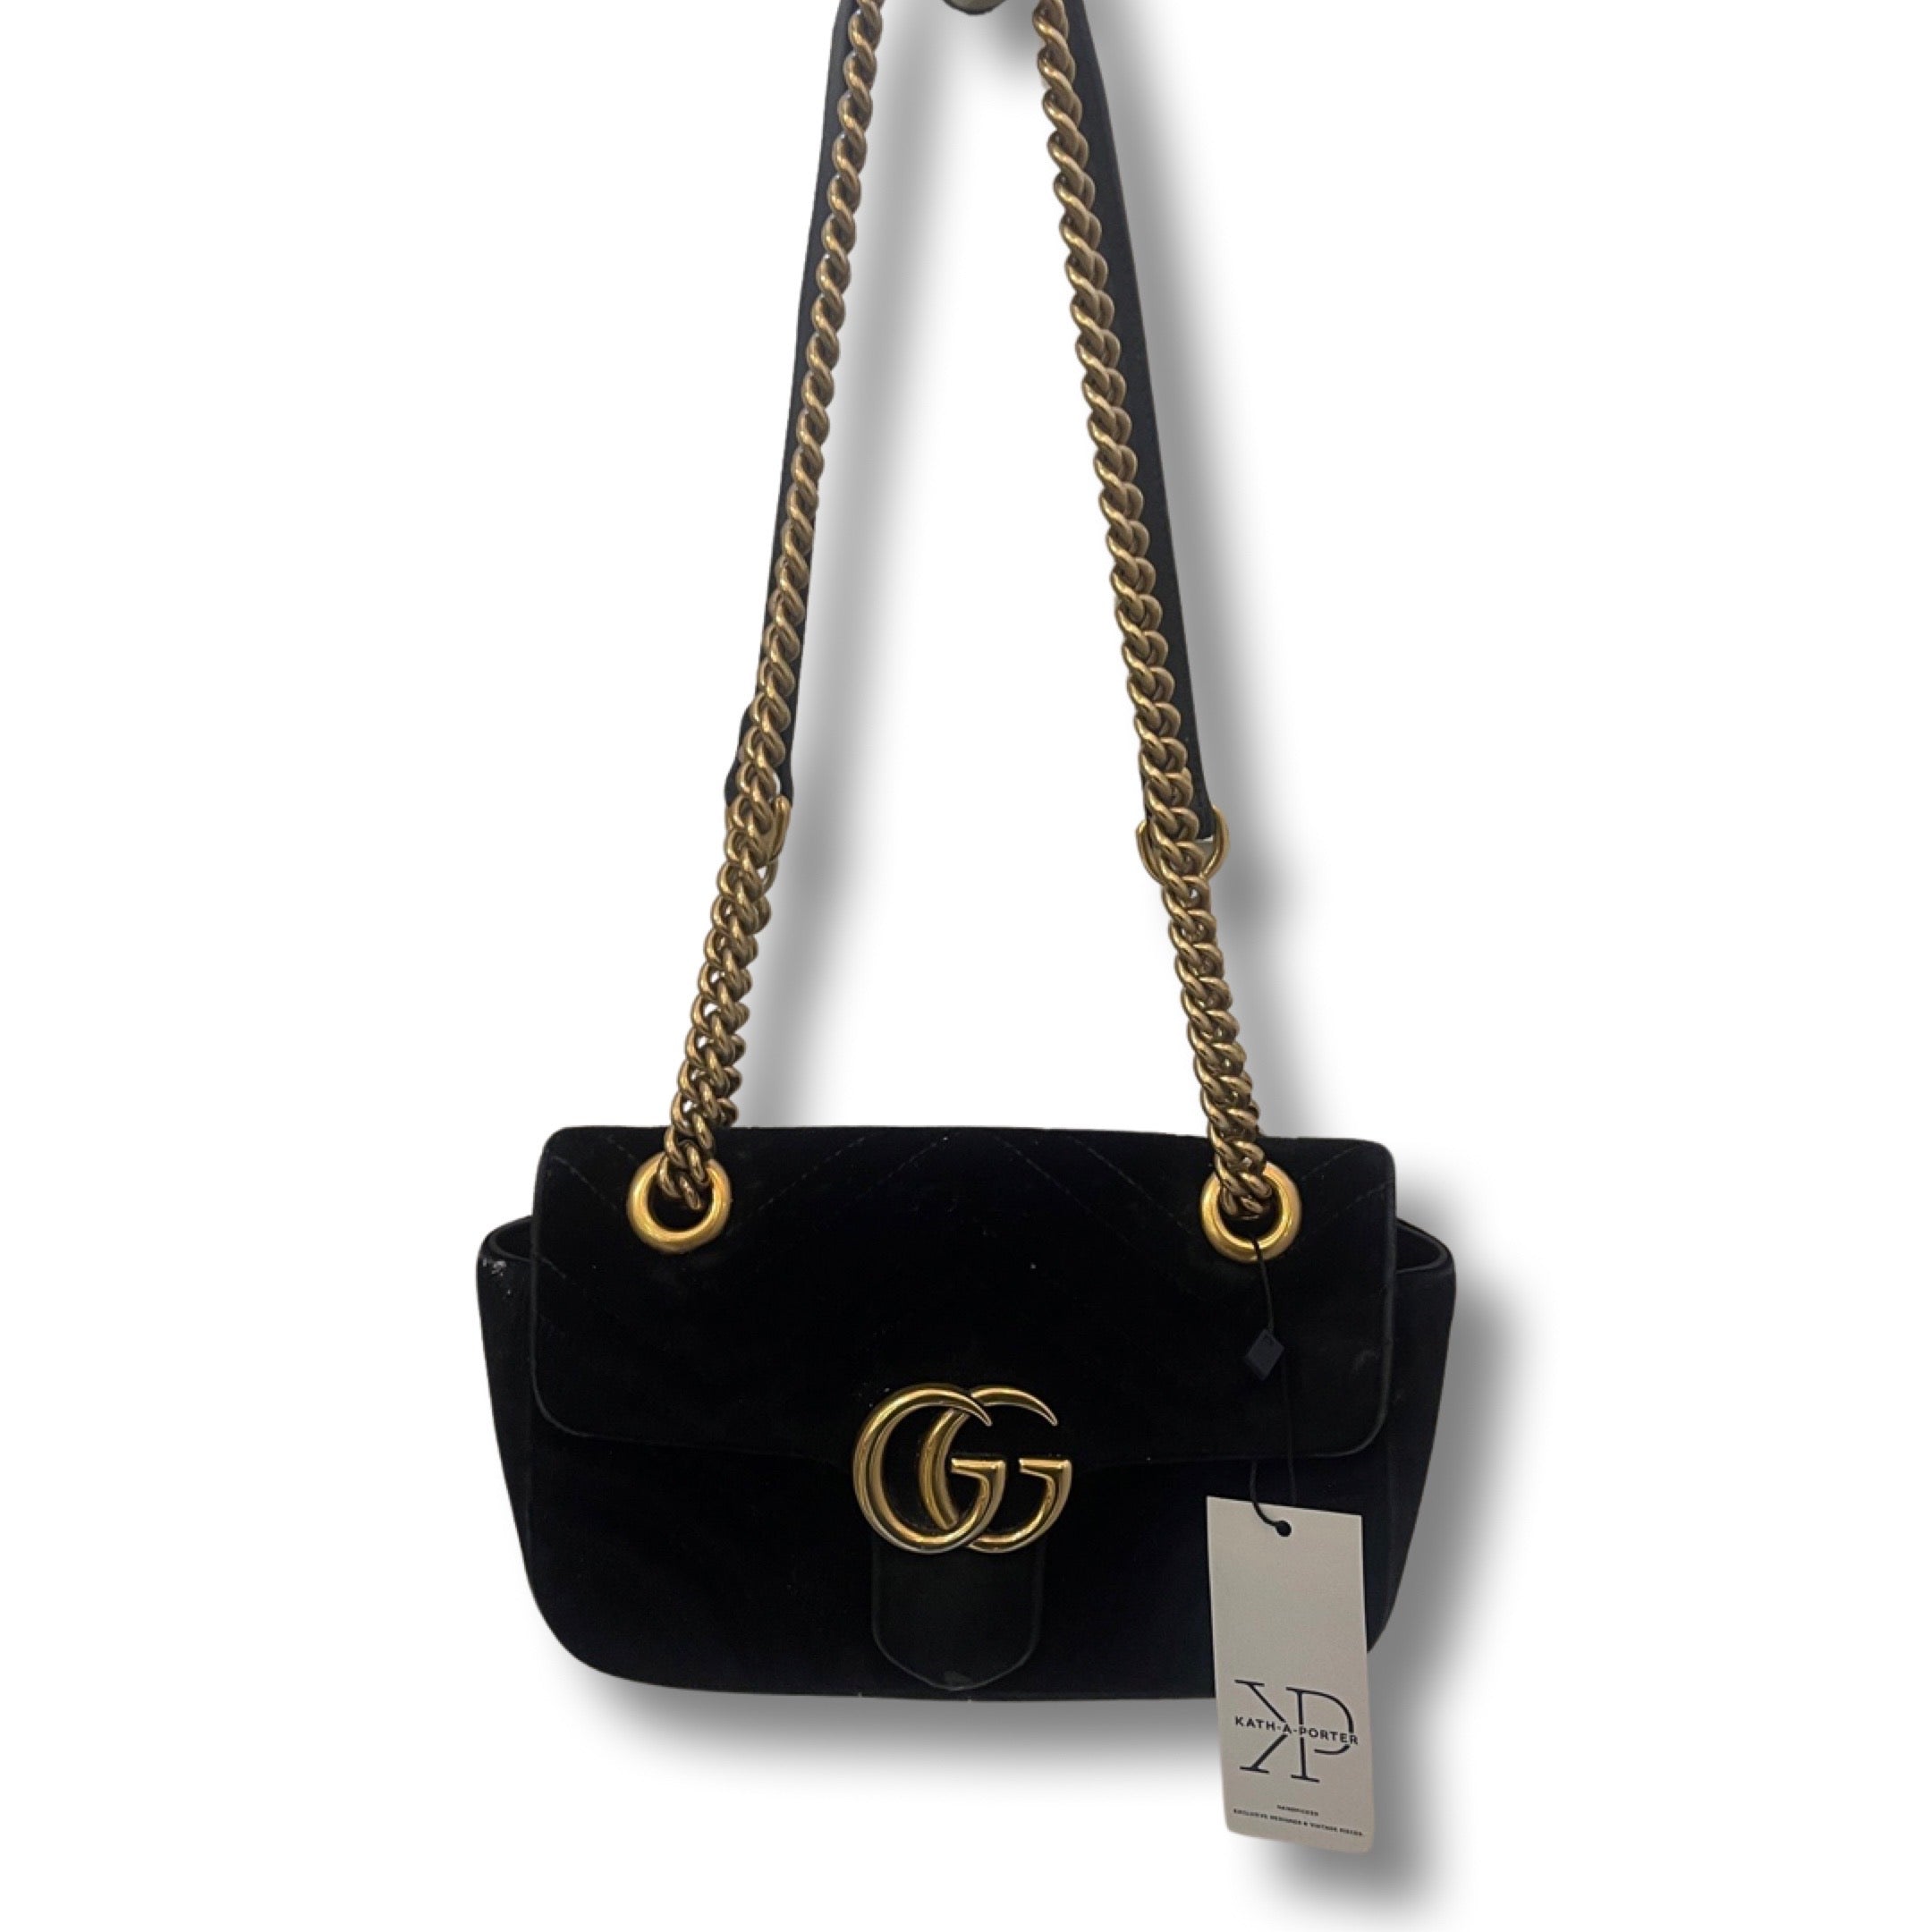 Gucci Marmont velvet handbag.